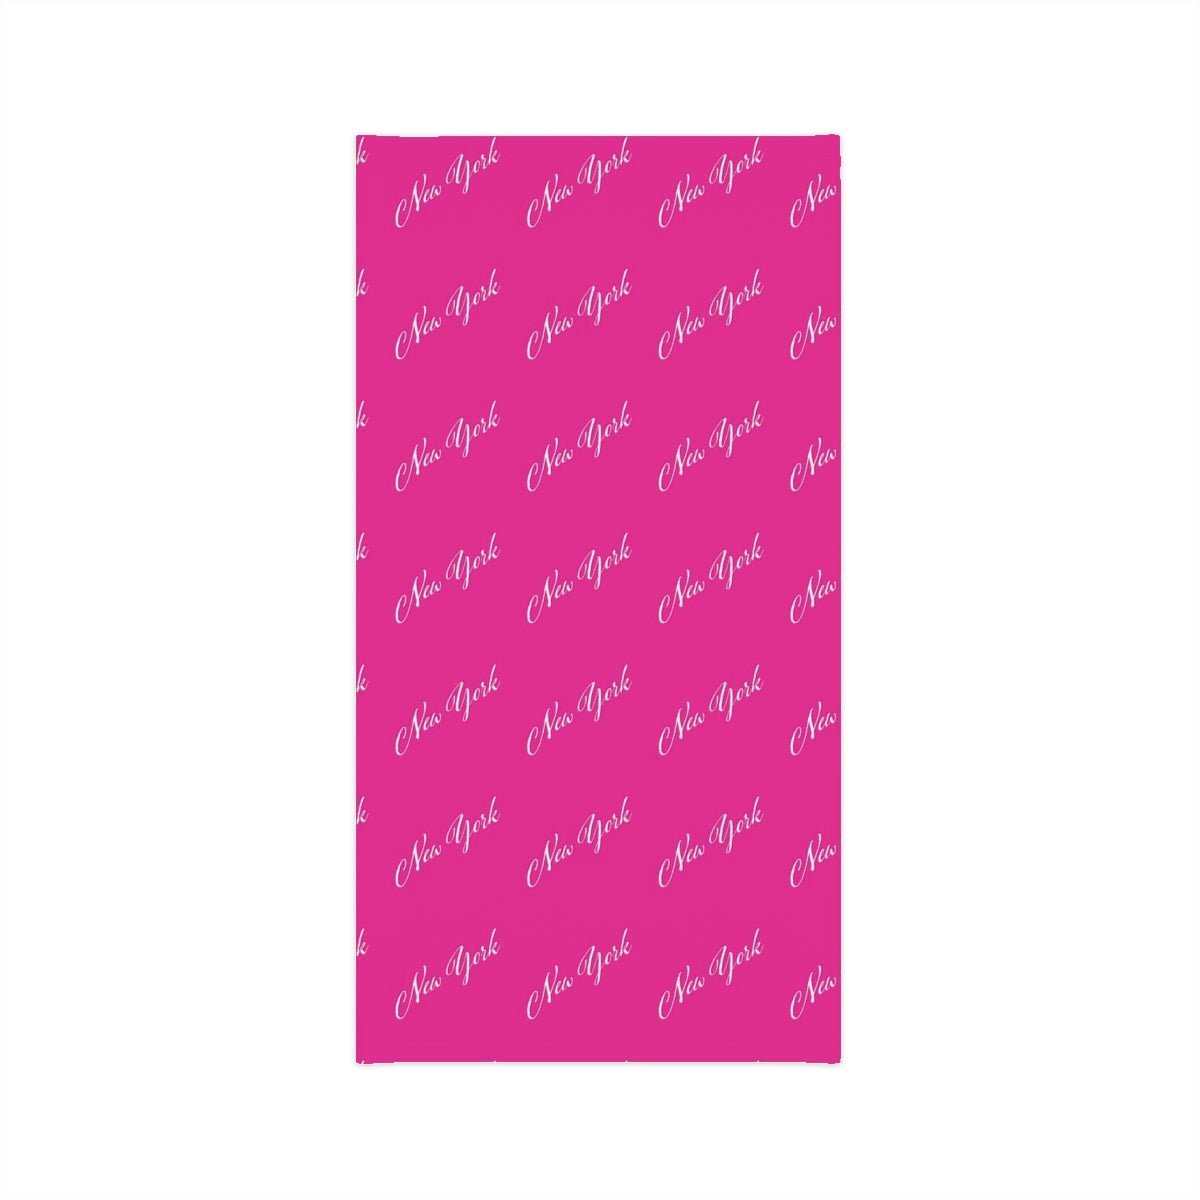 Fashionable Neck Gaiter For Women Girls Men - Multi-Purpose UPF 50+ UV+ Full Face Mask Buff Balaclava Pink NY - Studio40ParkLane